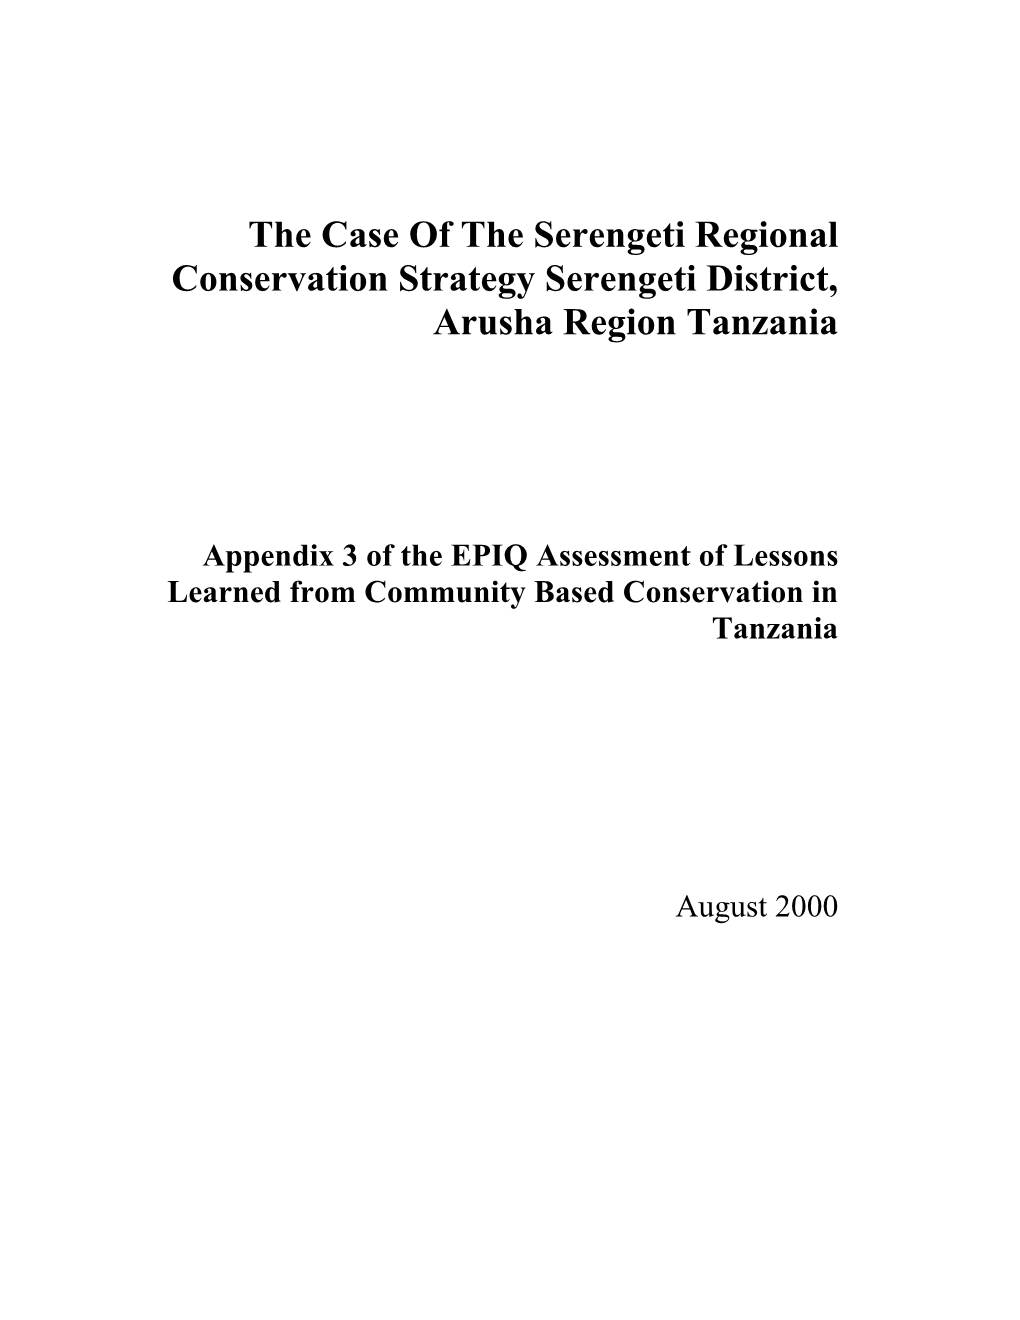 The Case of the Serengeti Regional Conservation Strategy Serengeti District, Arusha Region Tanzania